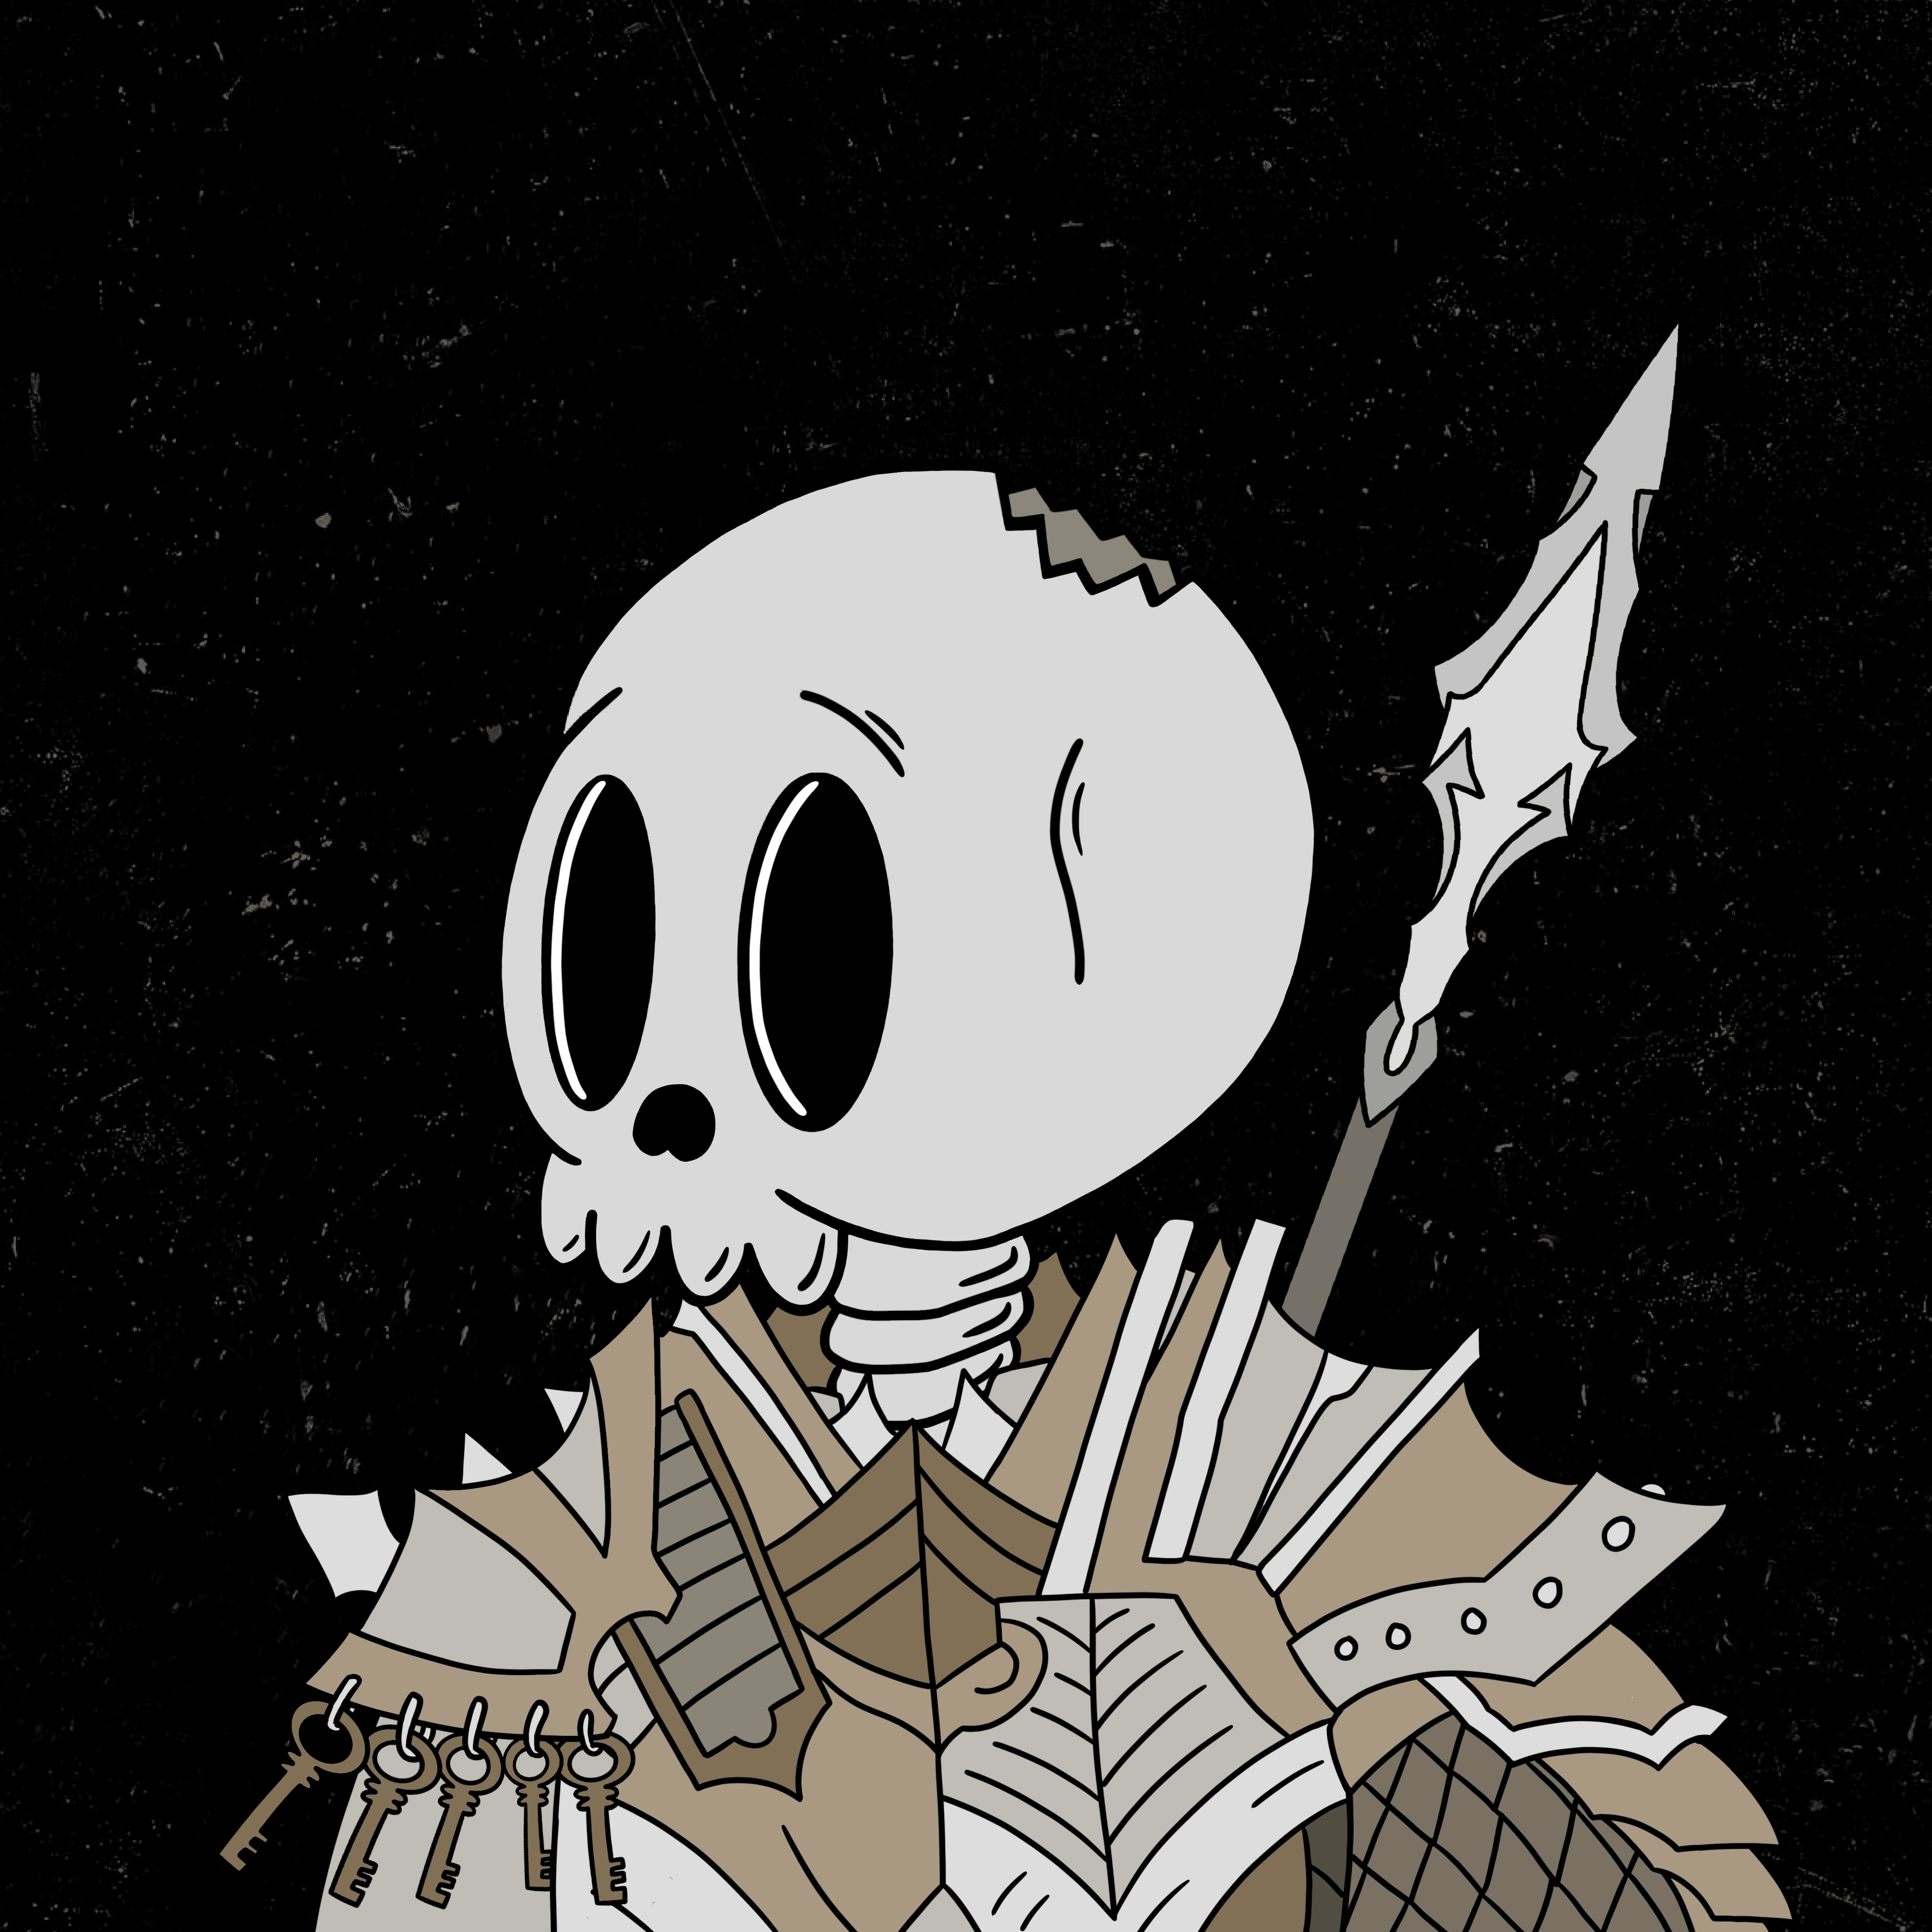 Skeleton 298: SAND WARRIOR